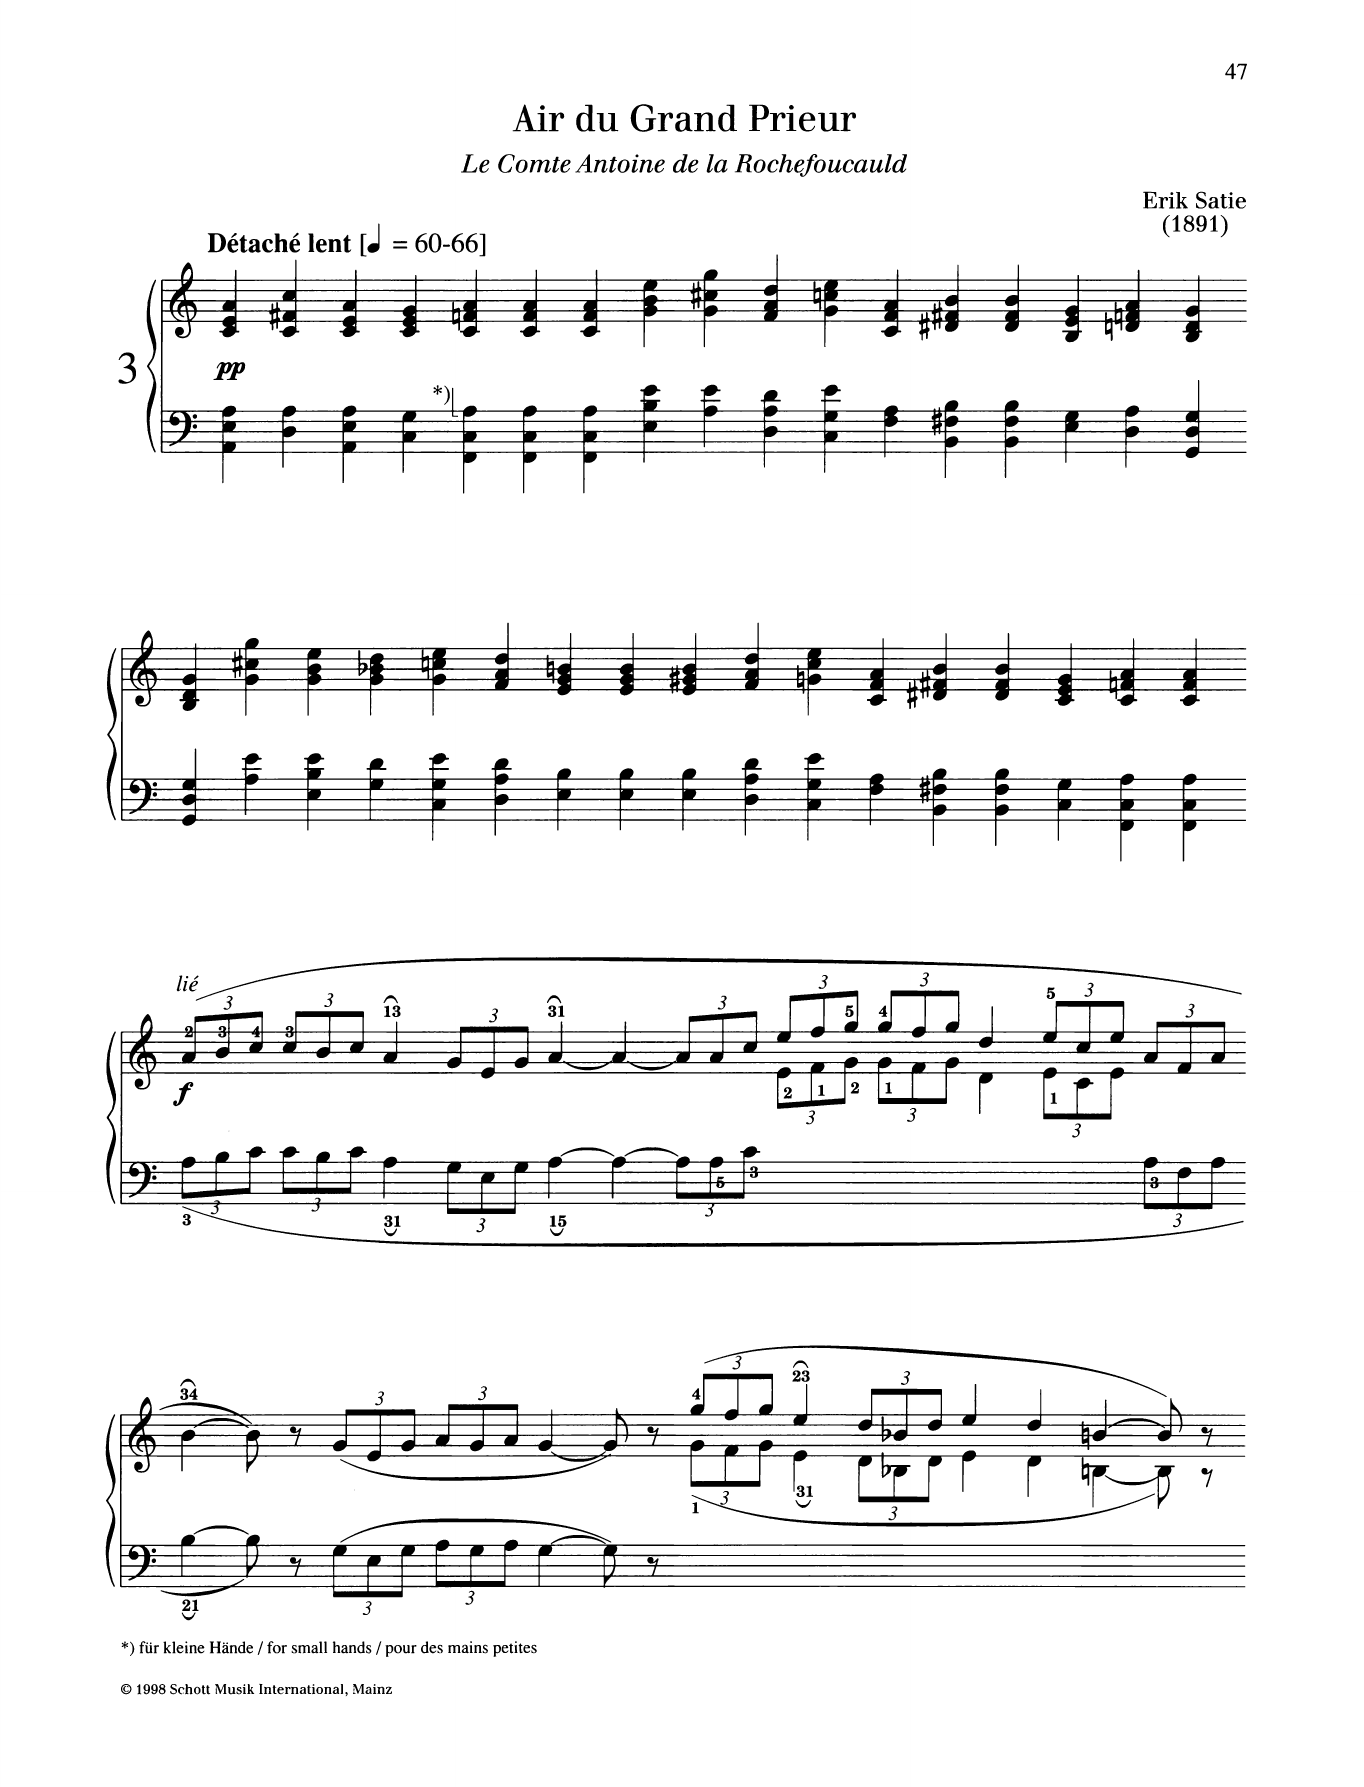 Erik Satie Air du Grand Prieur Sheet Music Notes & Chords for Piano Solo - Download or Print PDF